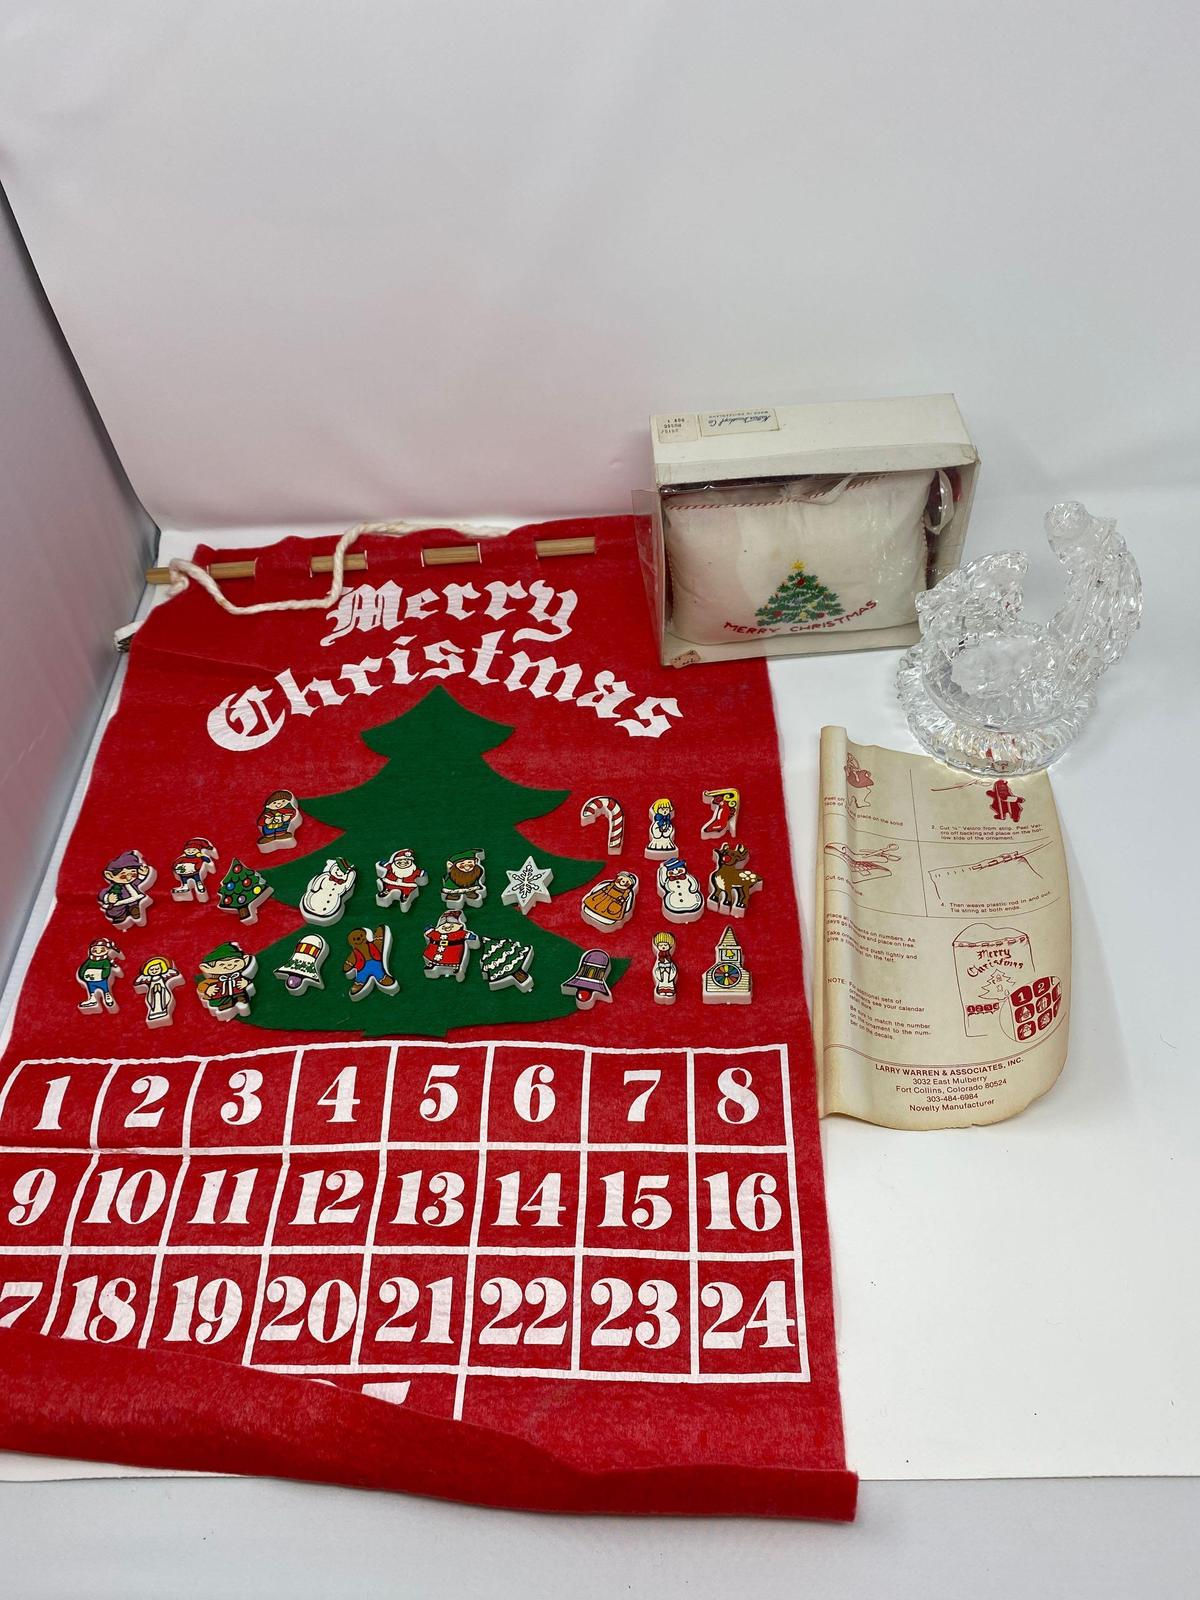 Fabric Advent Calendar, "Merry Christmas" Pillow; and Votive Holder